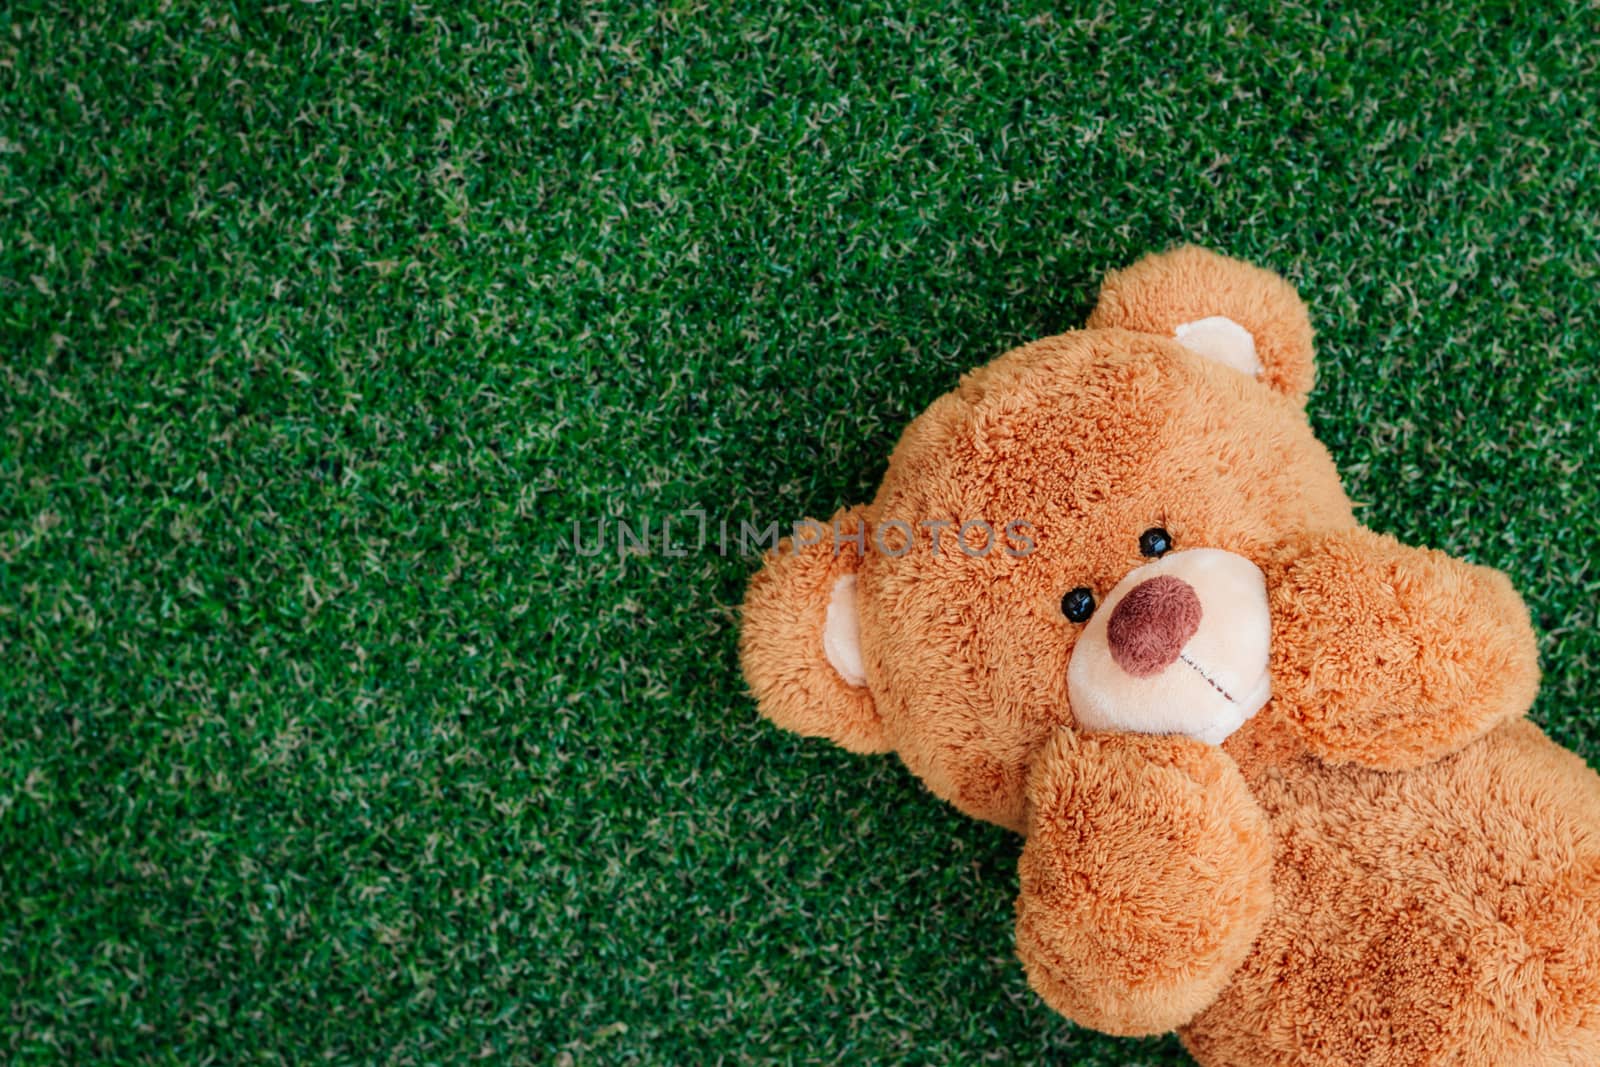 Cute teddy bear on green grass background